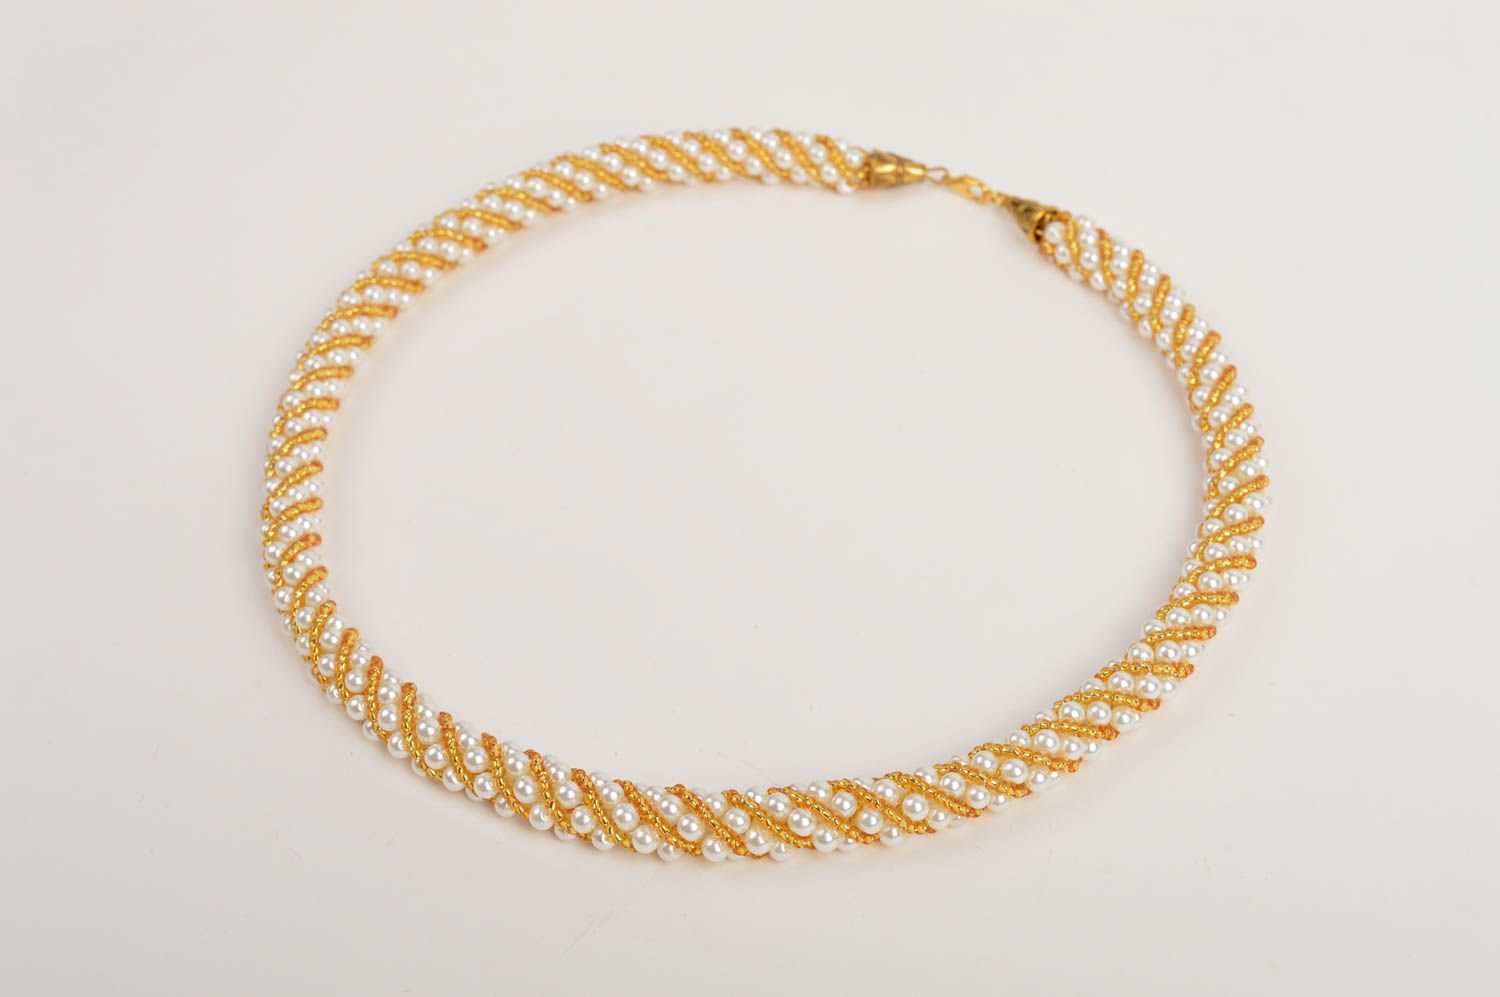 Handmade necklace designer accessory beaded jewelry unusual necklace gift ideas photo 2